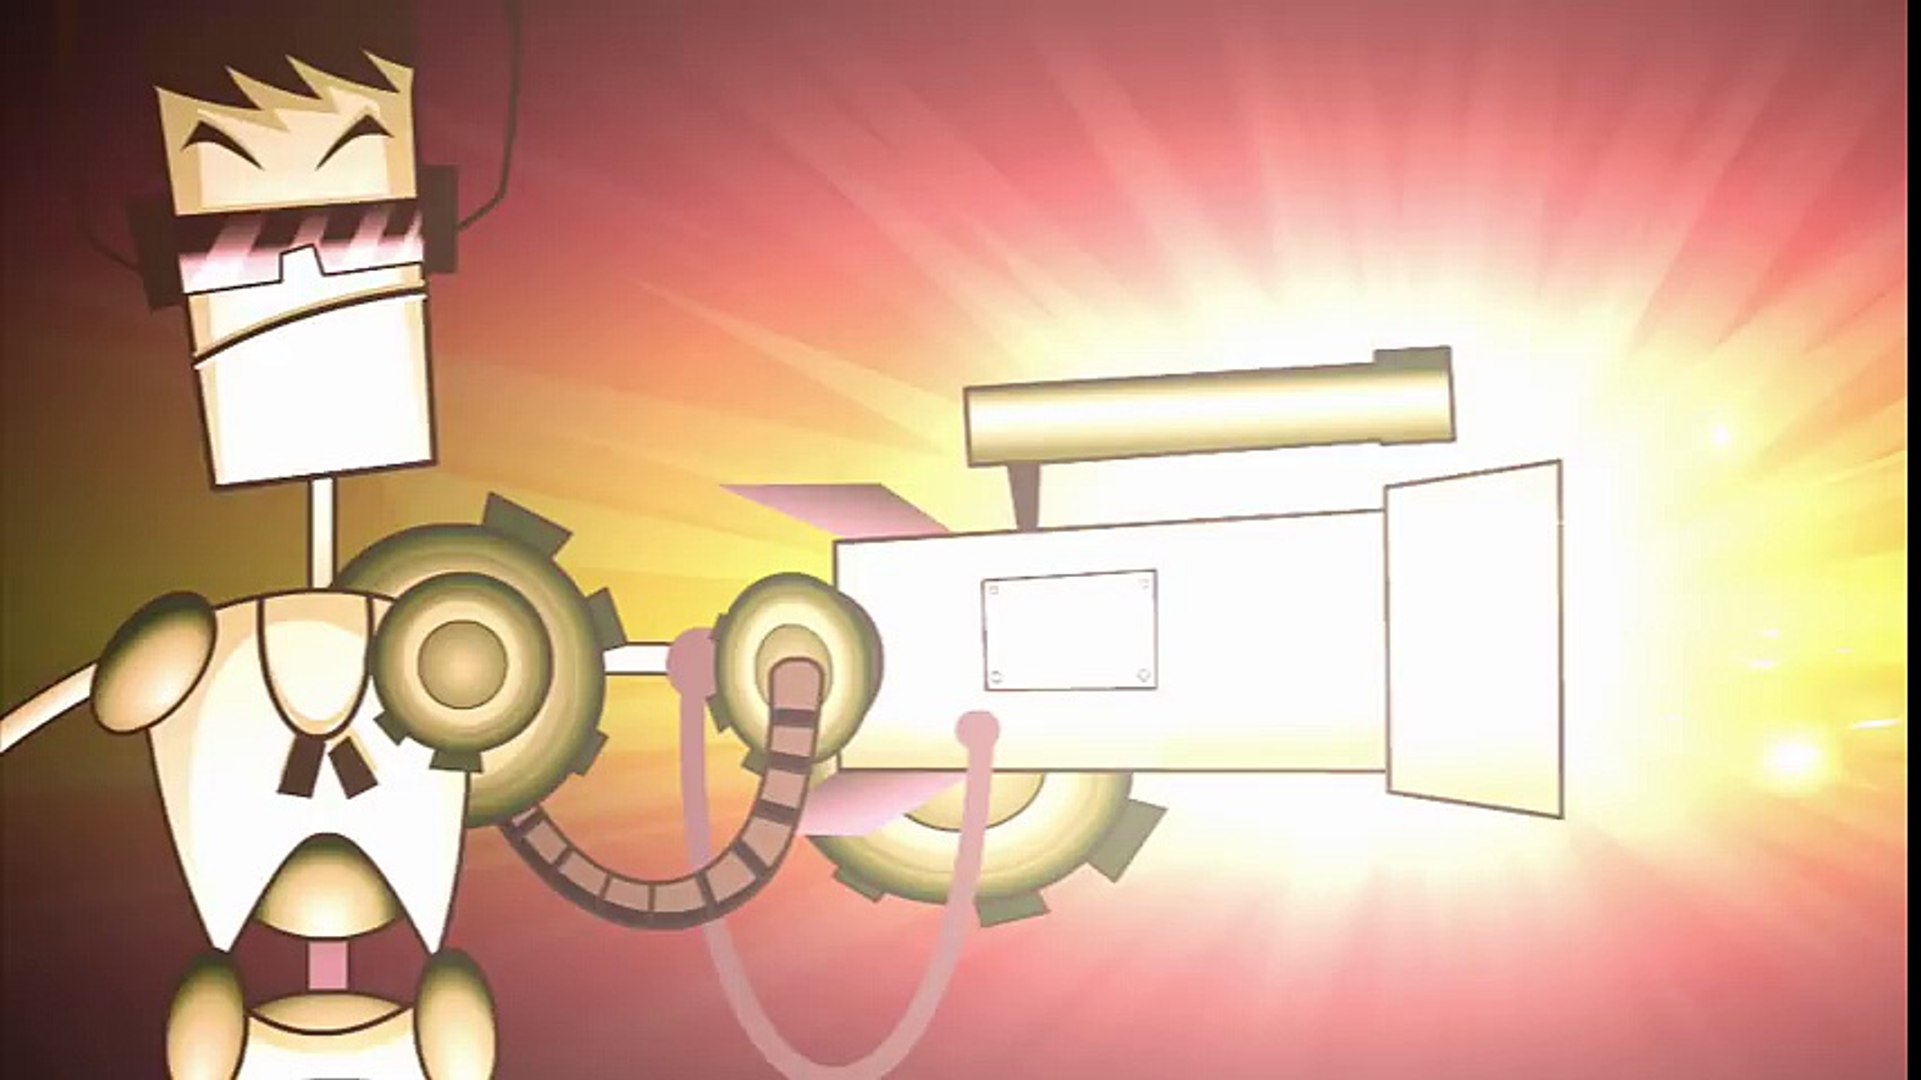 TARBOY animation - an epic, animated short film 2D Flash animation